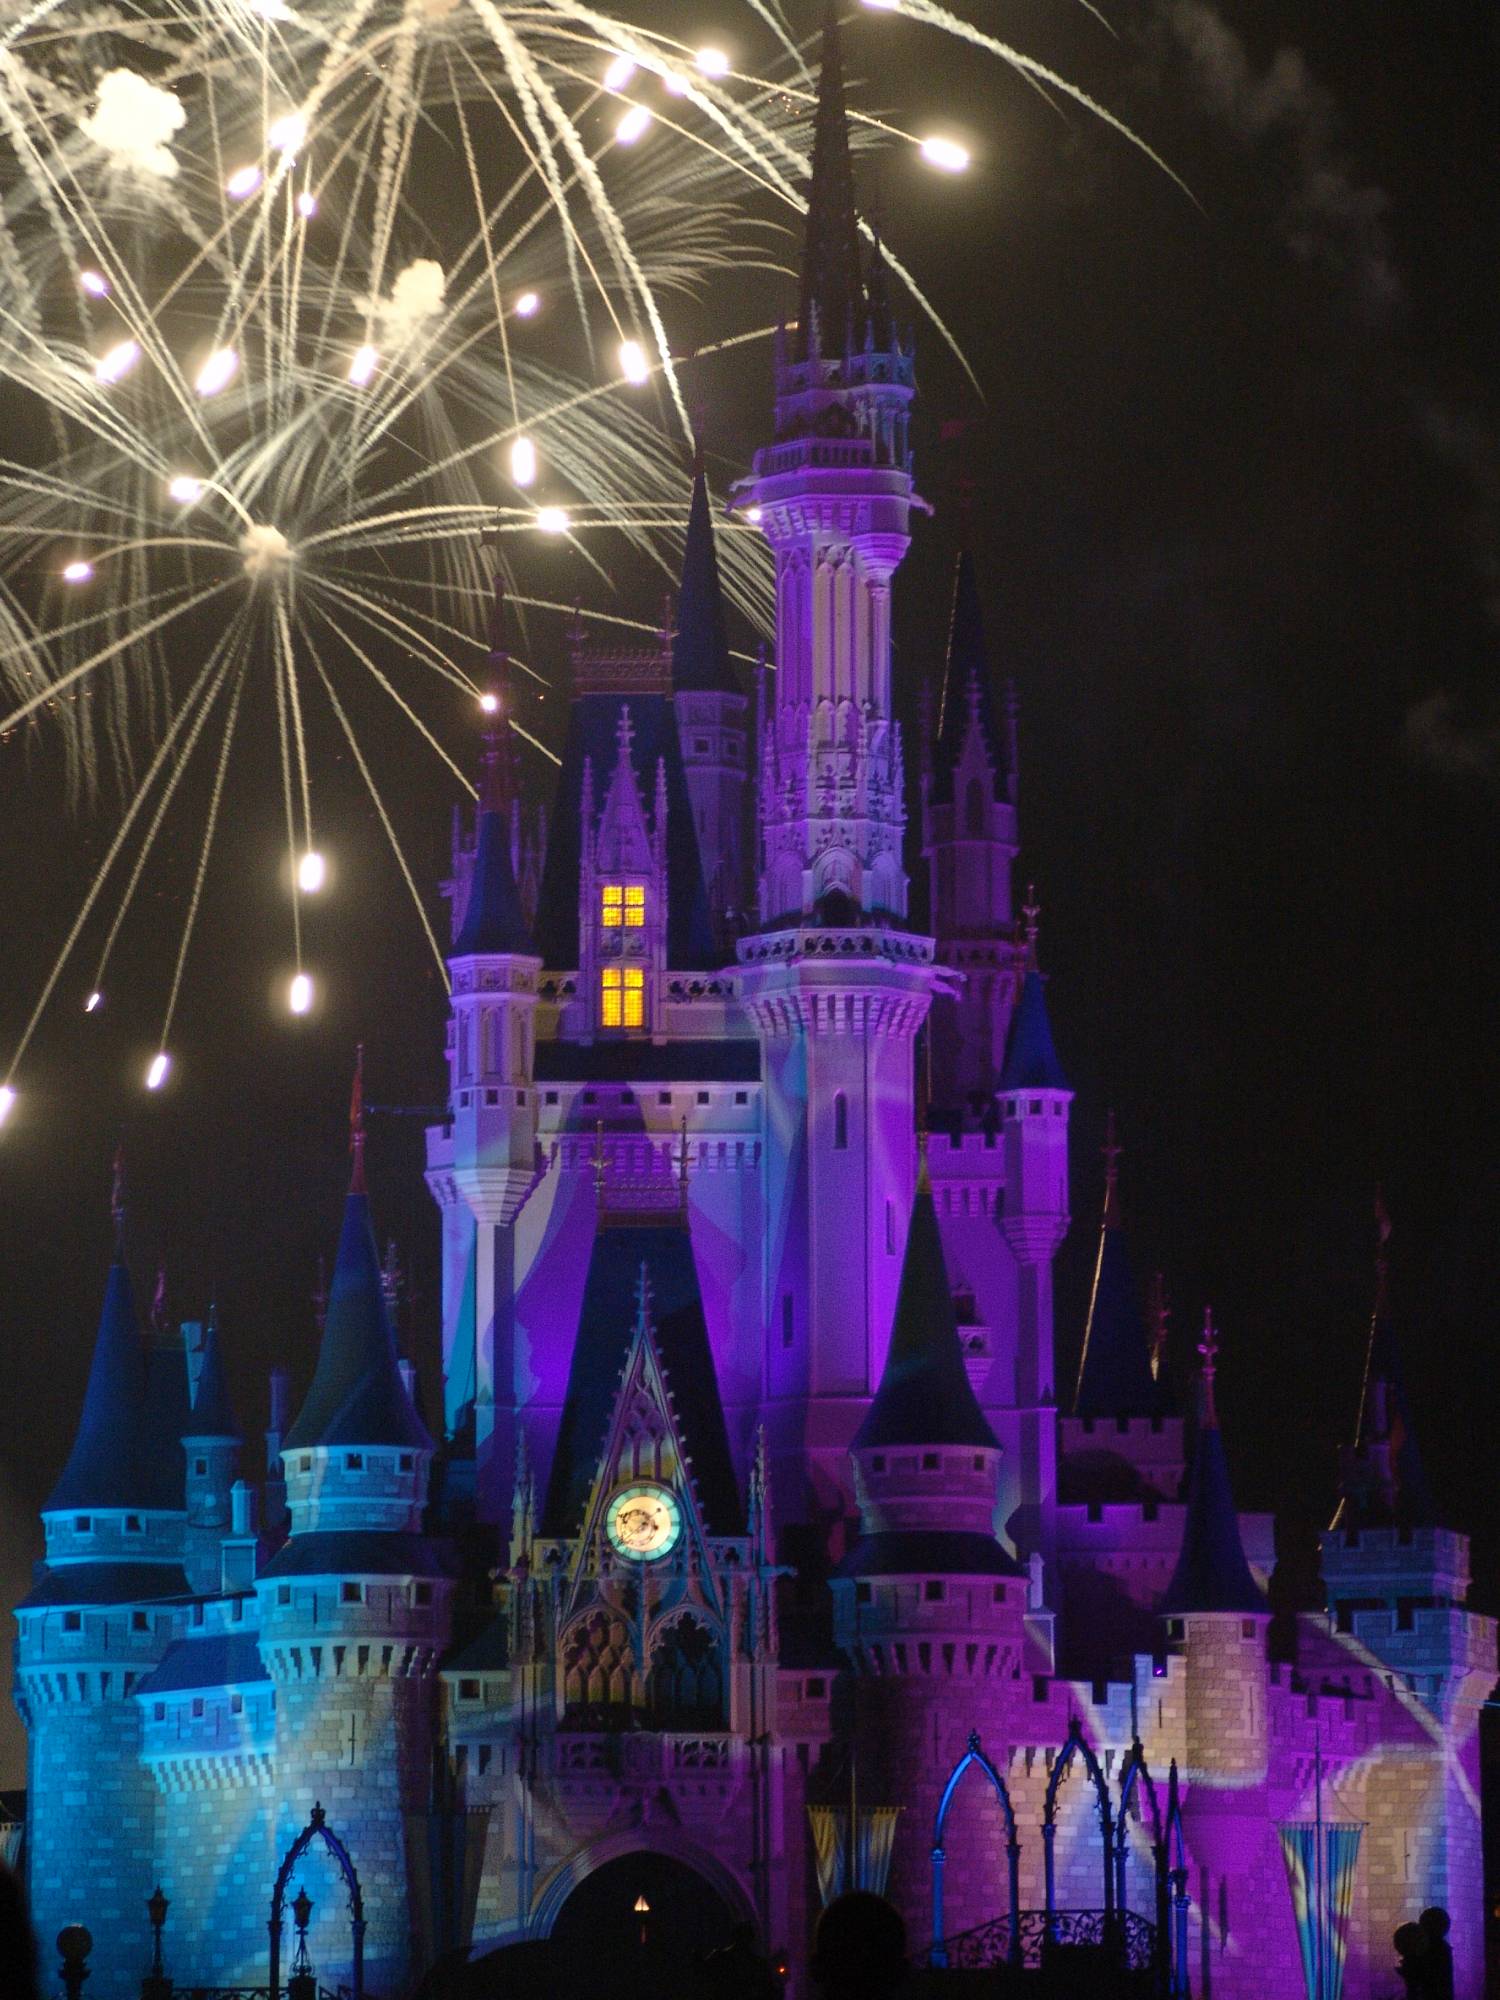 Magic Kingdom - Wishes over Castle